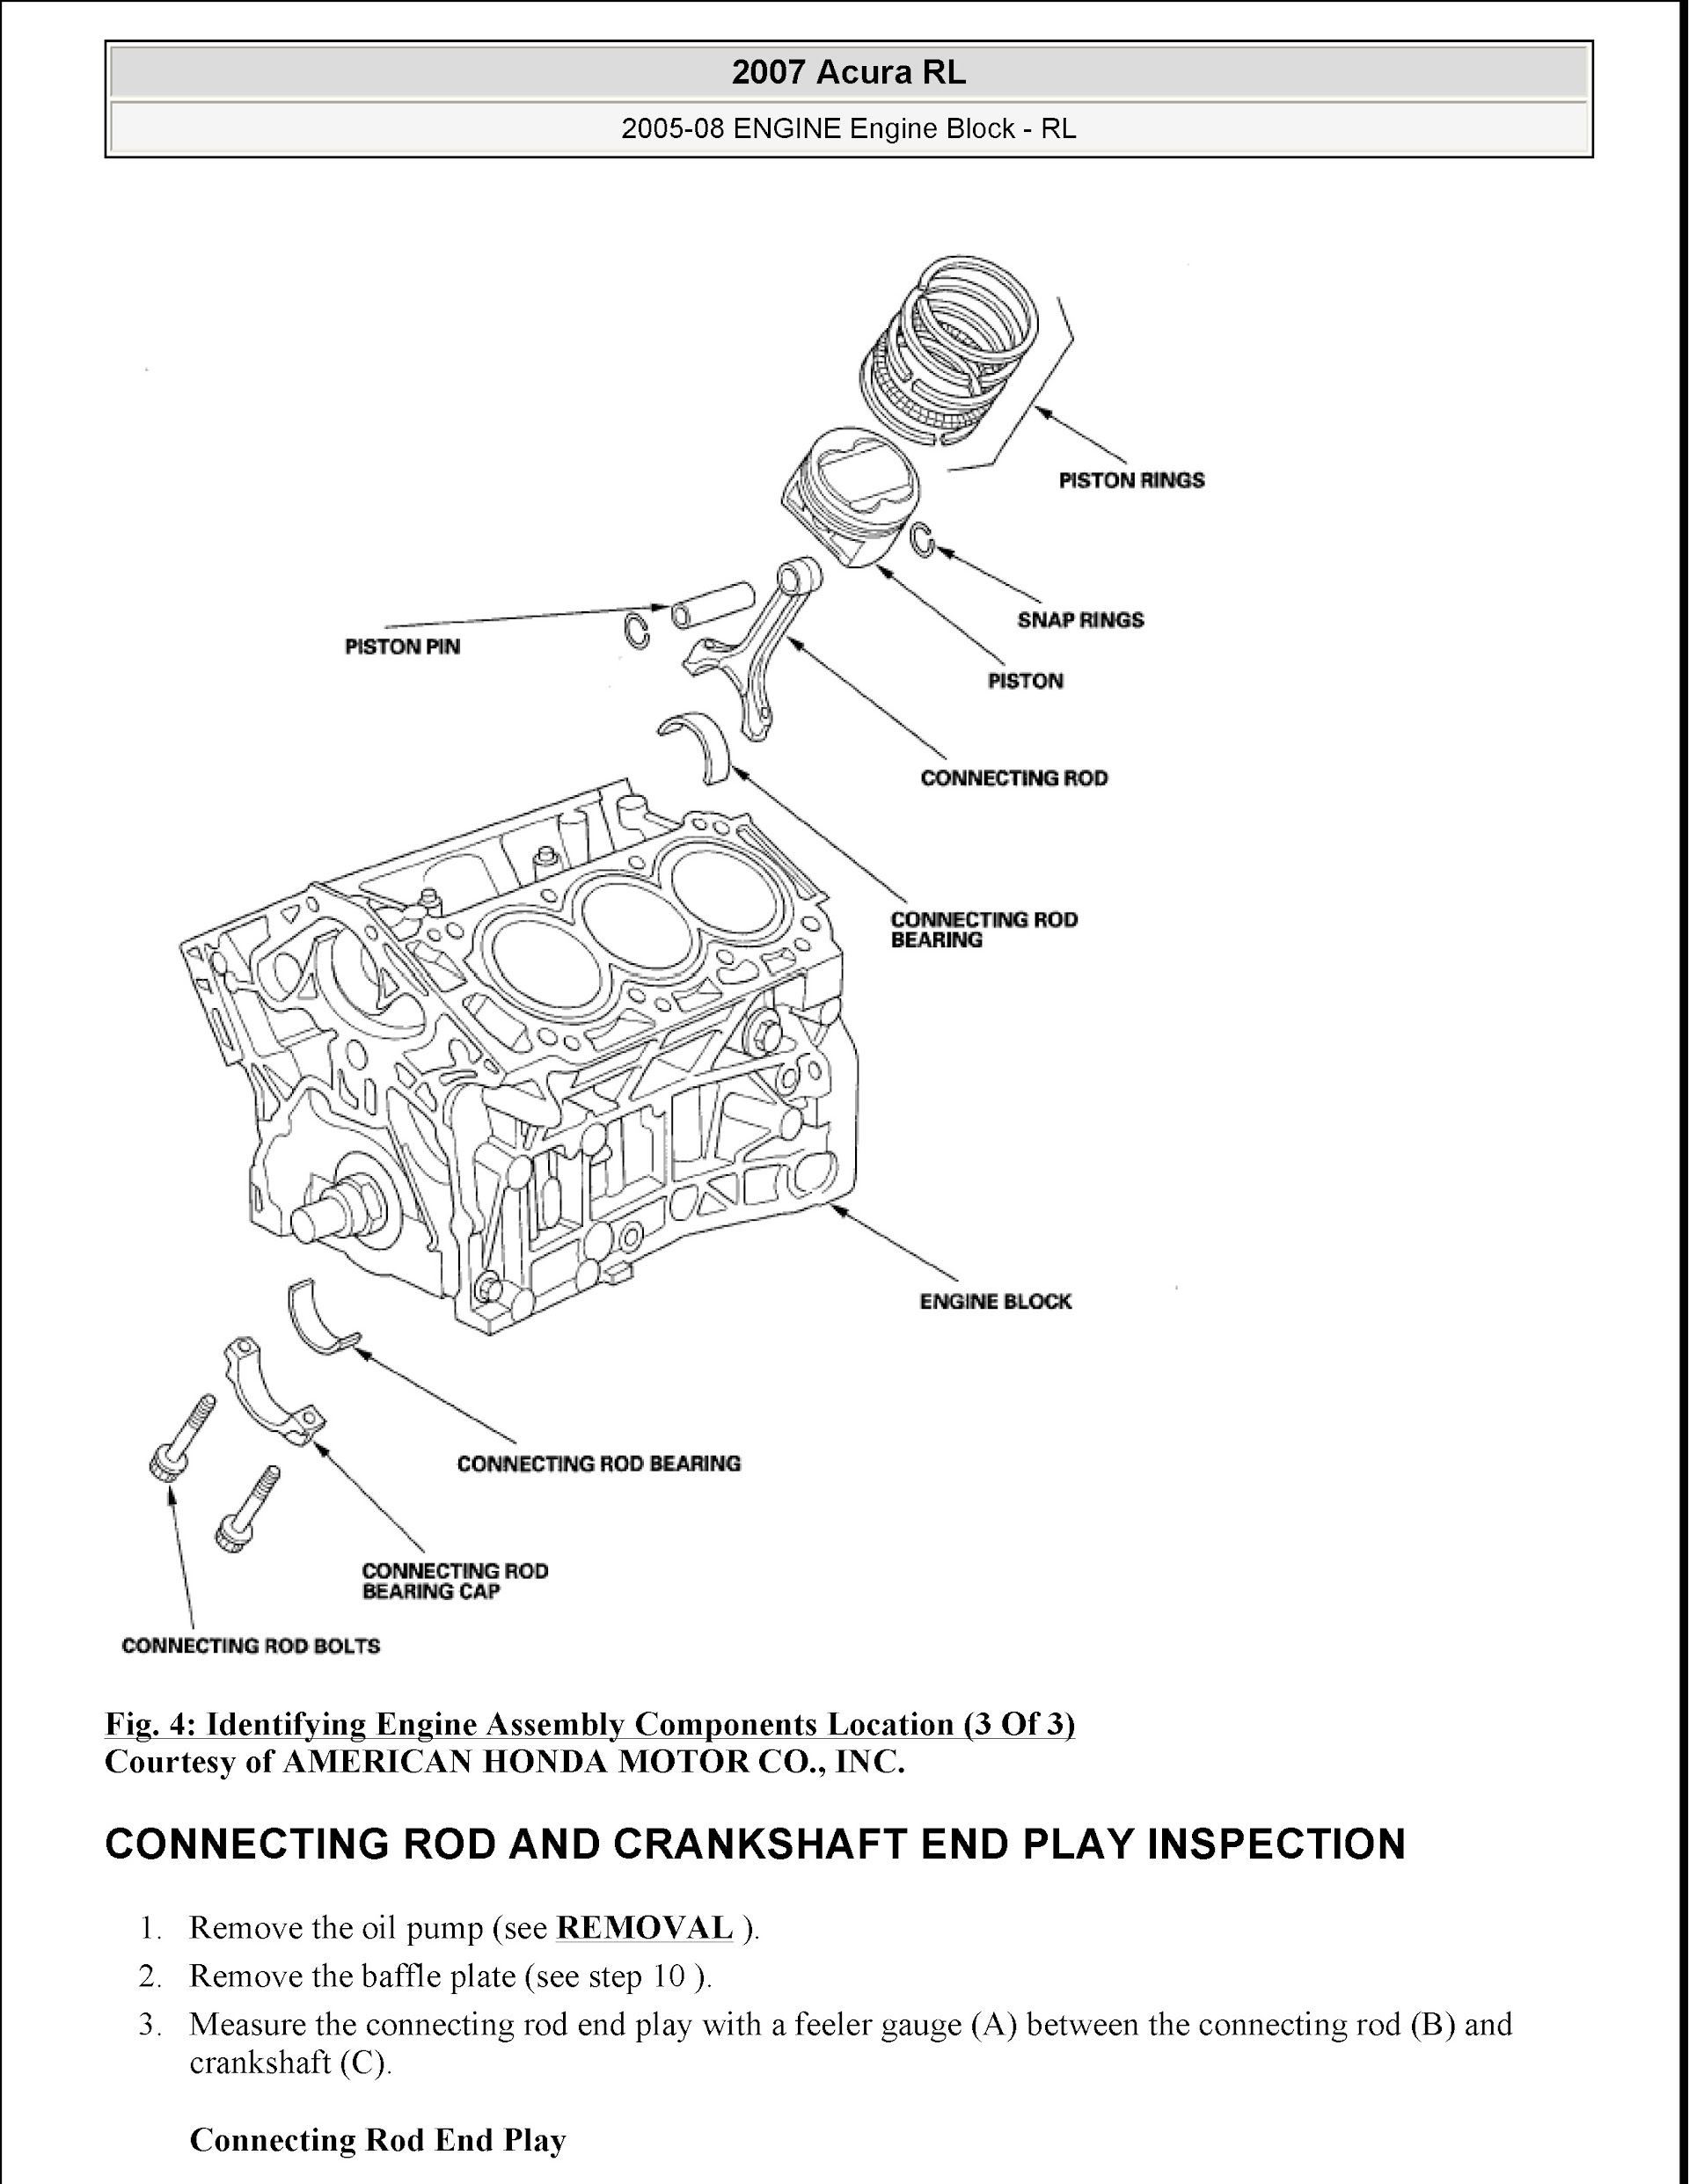 2008 Acura RL Repair Manual